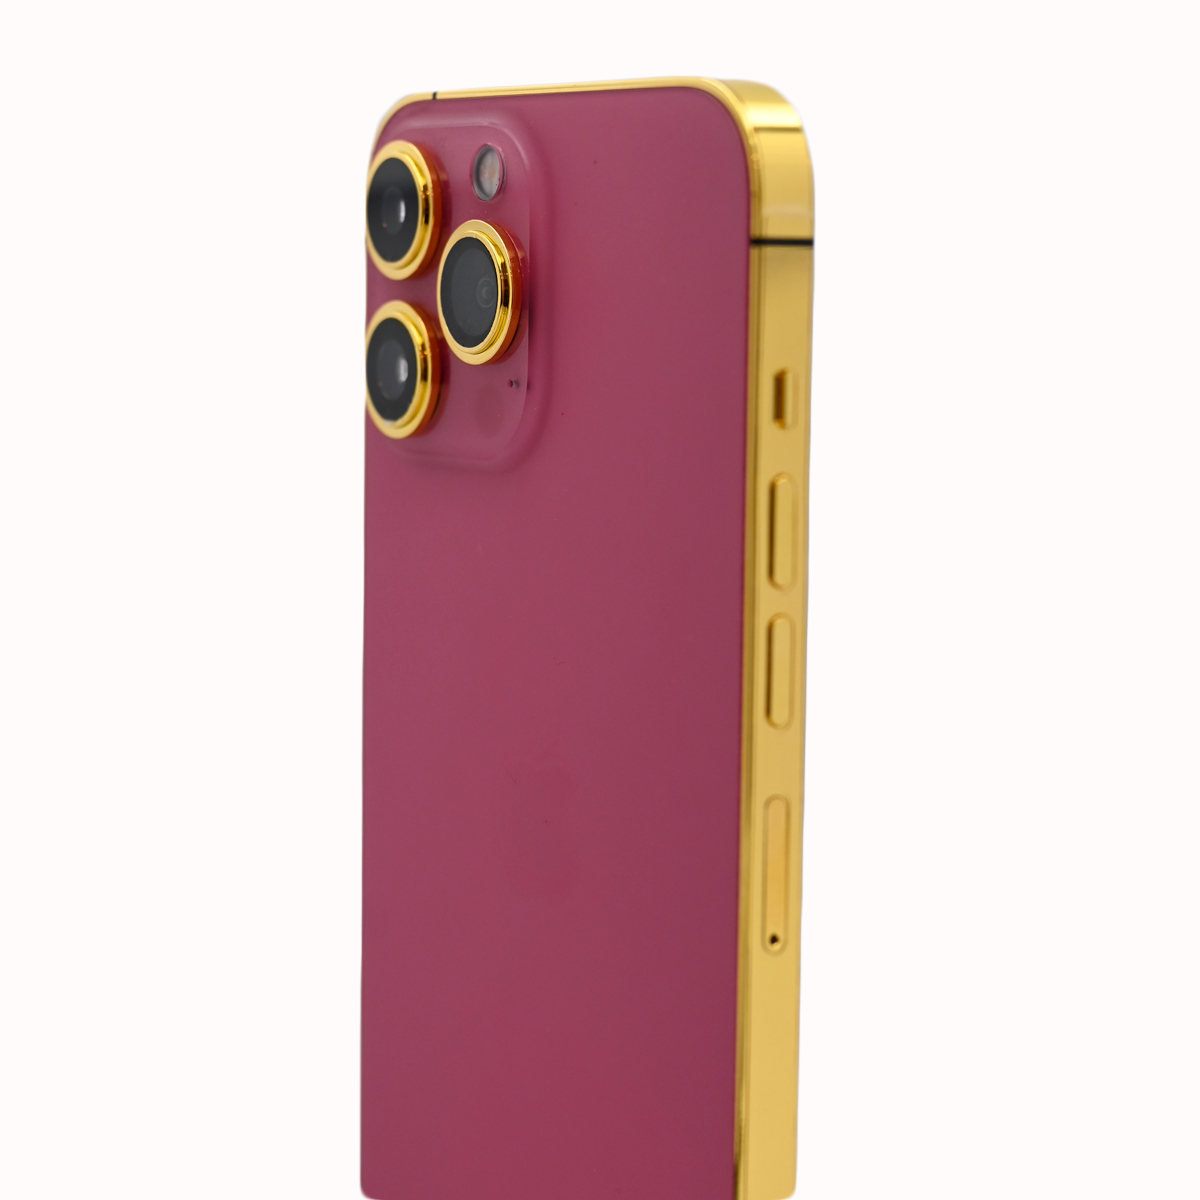 Caviar Luxury 24k Gold Frame Customized iPhone 13 Pro Max 256 GB - Pink